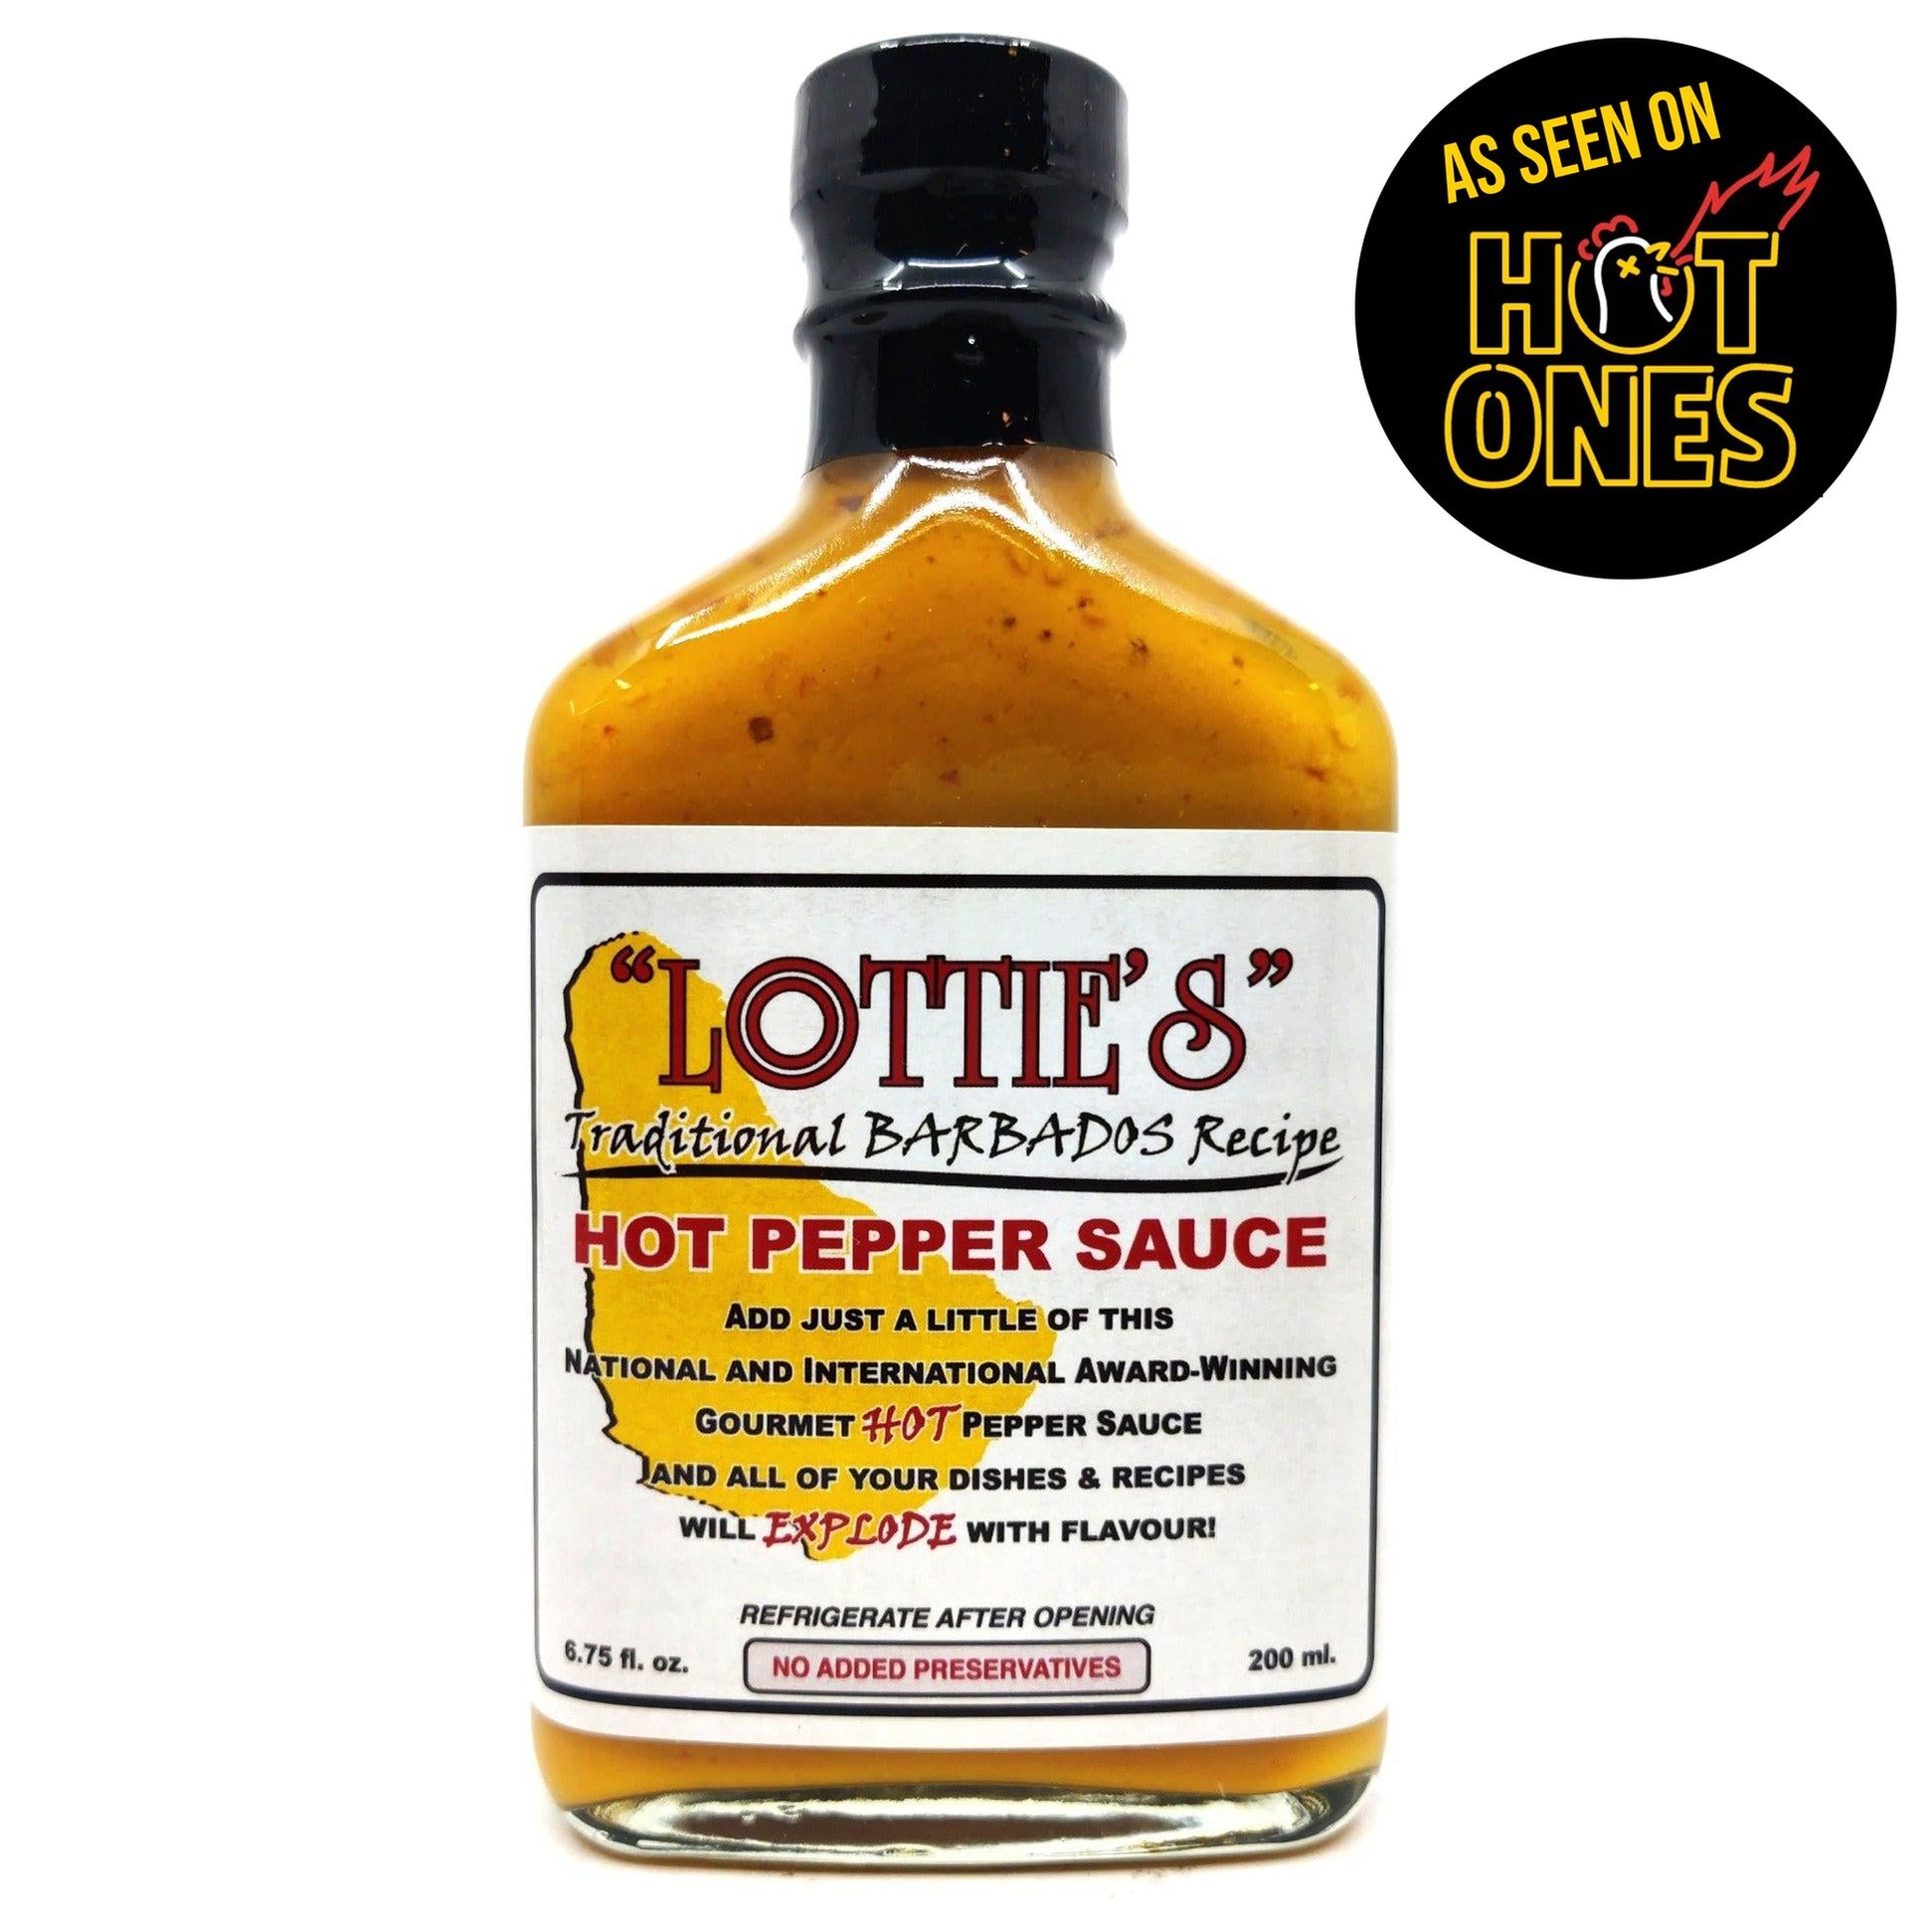 Lottie's Traditional Barbados Recipe Yellow Hot Pepper Sauce (200ml)-Hop Burns & Black